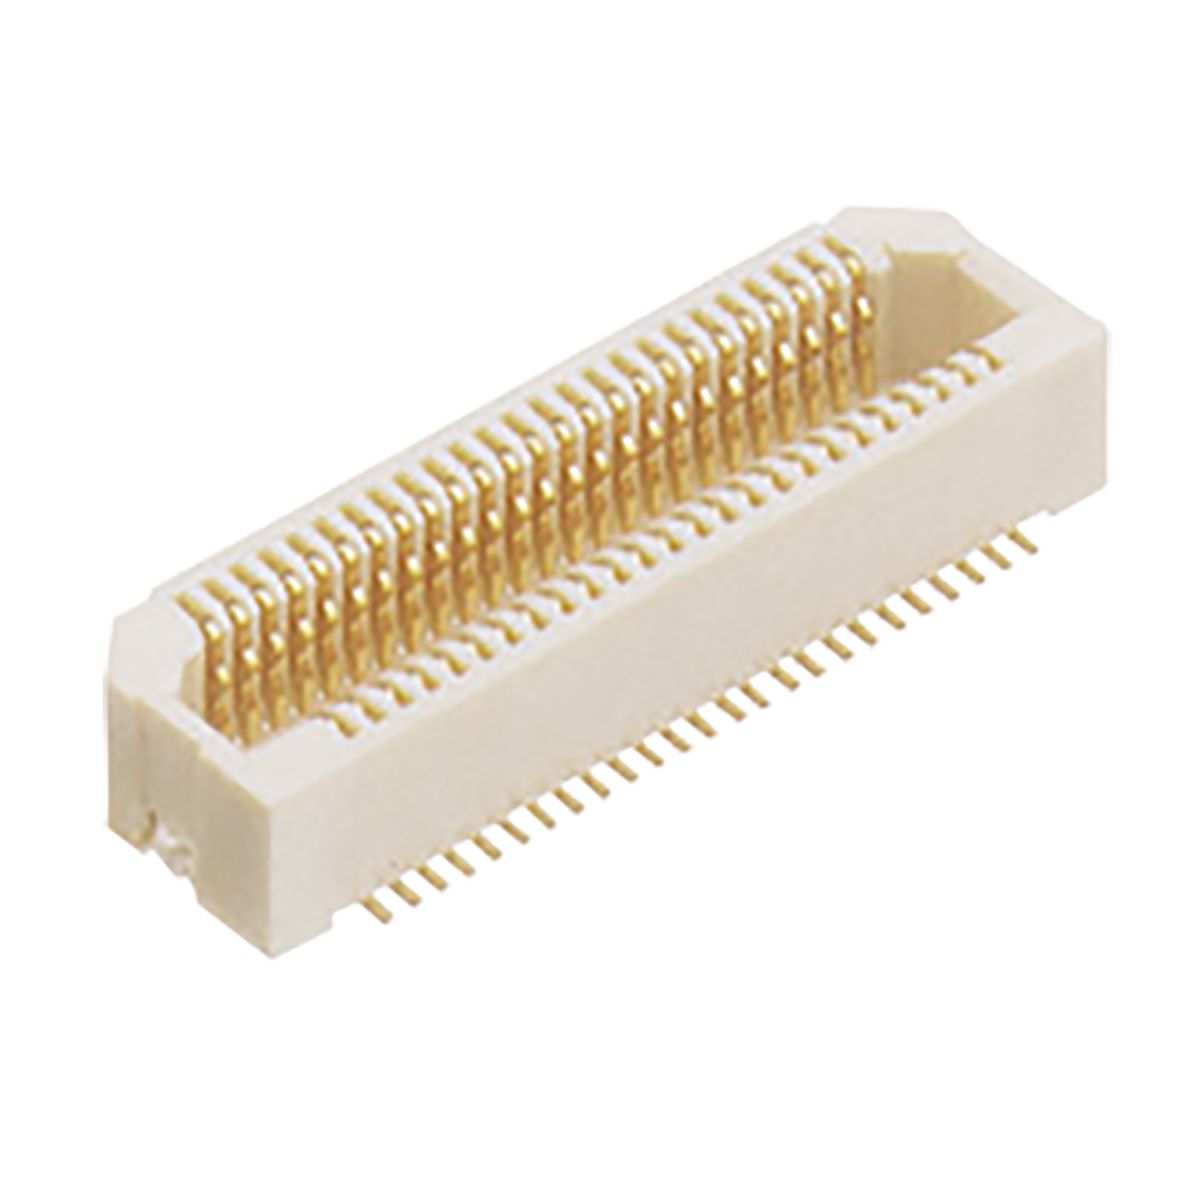 Conector hembra para PCB Panasonic serie P5KS, de 24 vías en 2 filas, paso 0.5mm, 60 V, 16A, Montaje Superficial, para